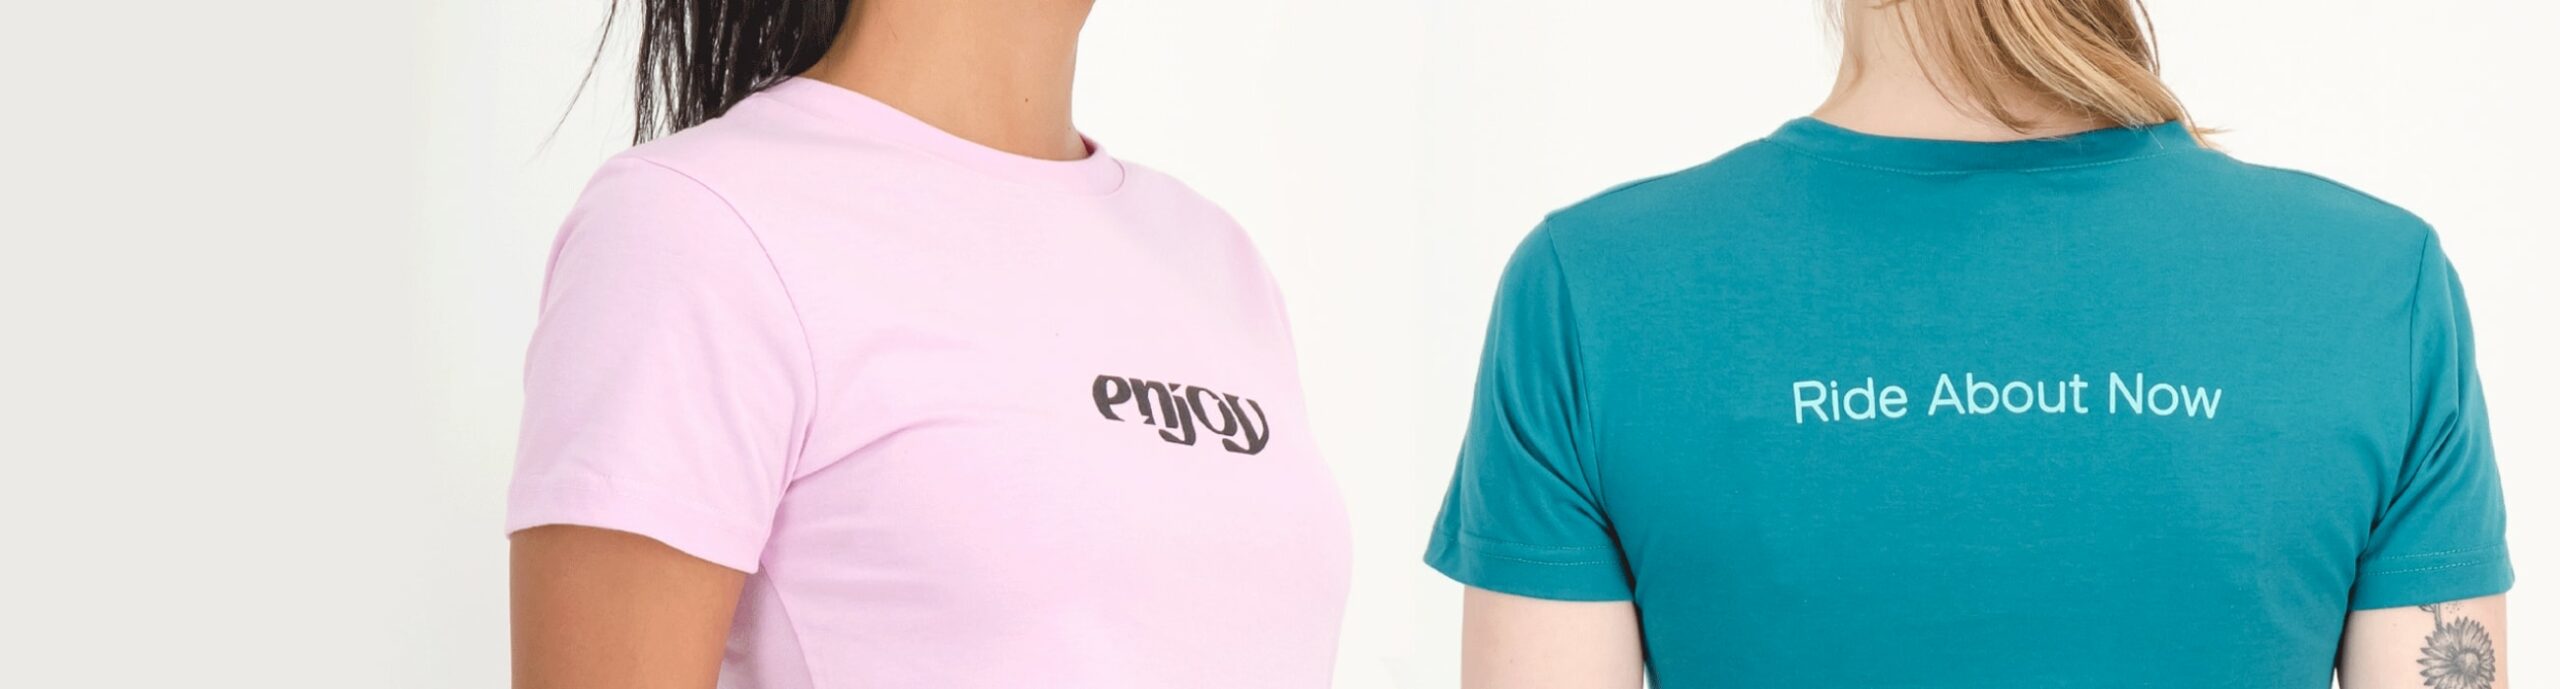 Womens range of lifestyle Cotton Tee Shirts designed by Enjoy.cc